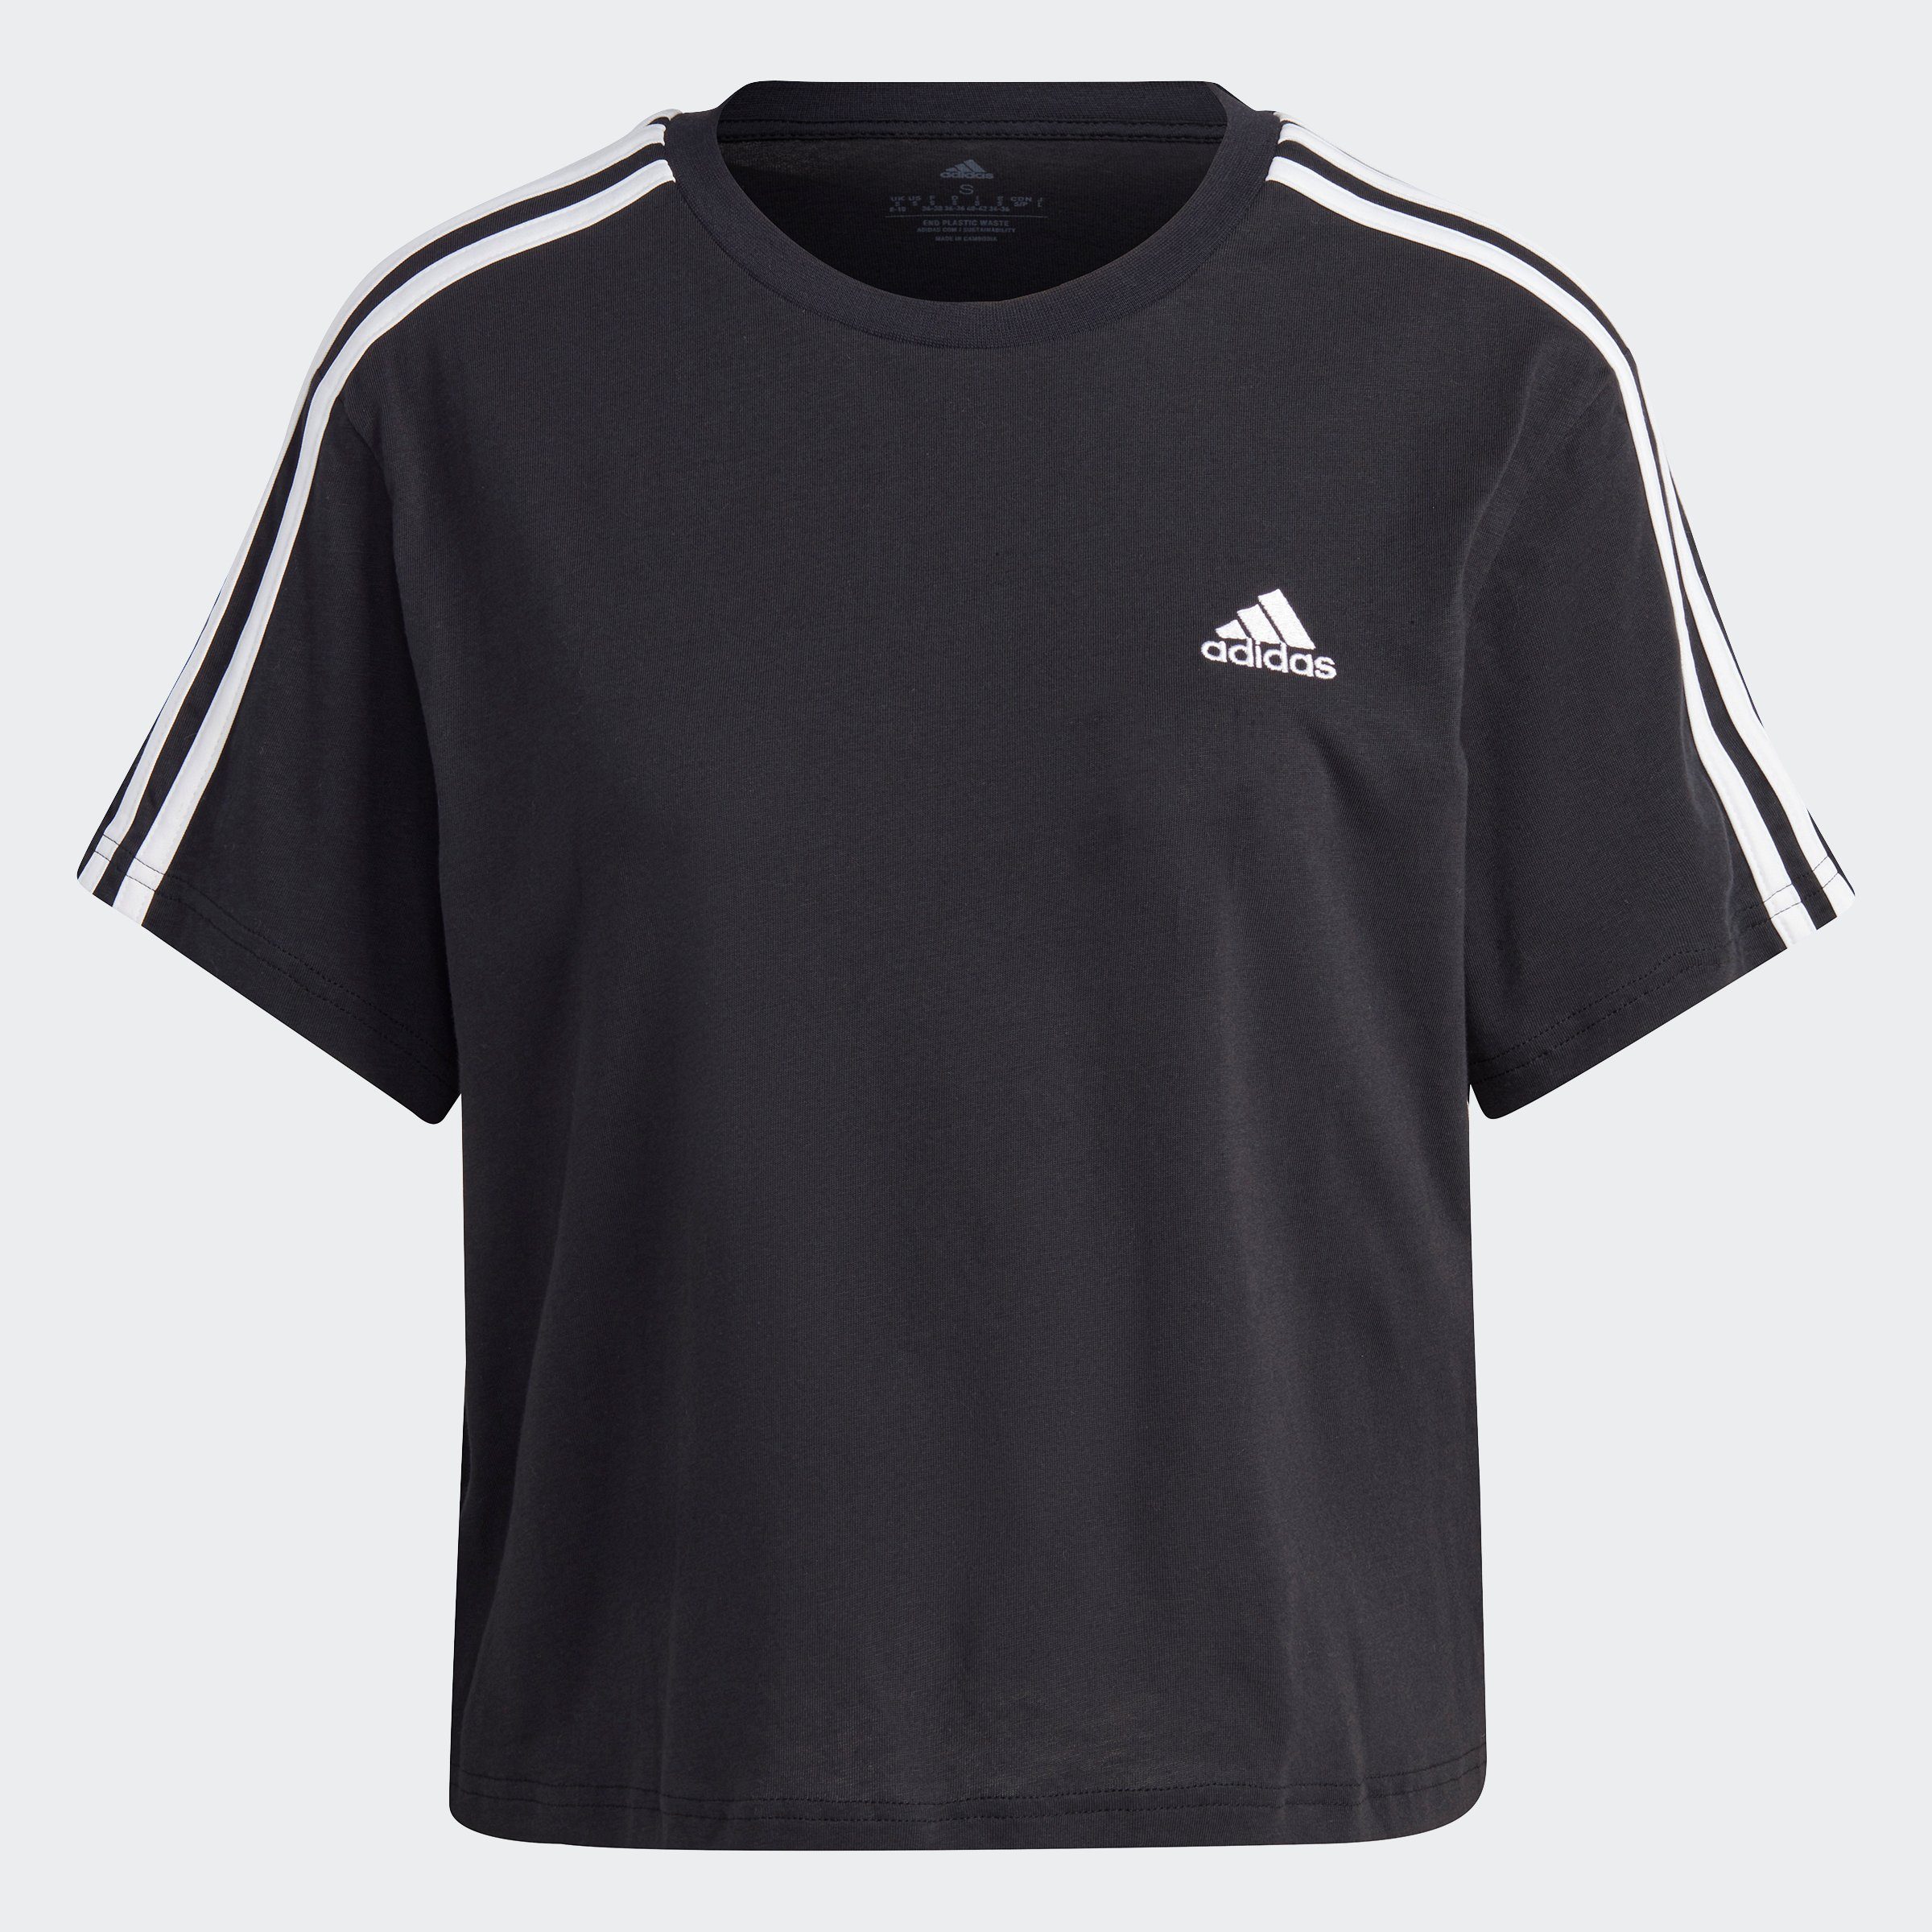 adidas Sportswear T-Shirt 3S White Black TOP CR W 